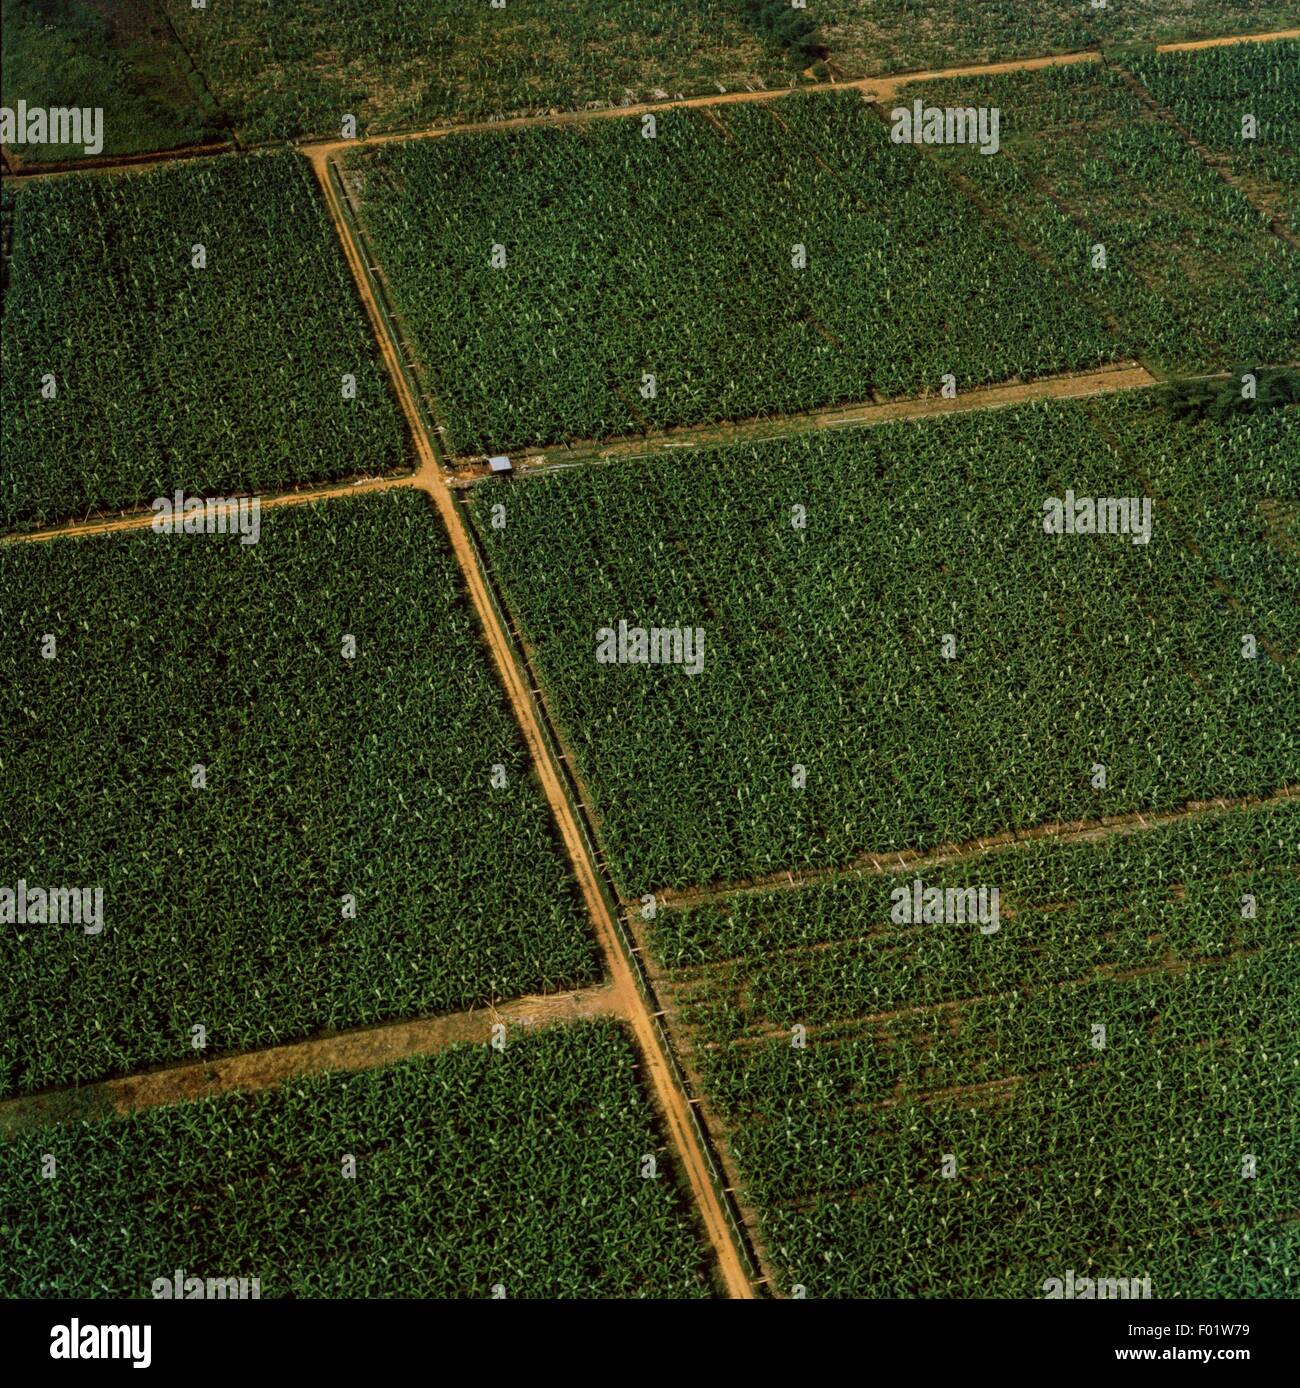 Vista aérea de la plantación bananera - Cote d'Ivoire Foto de stock